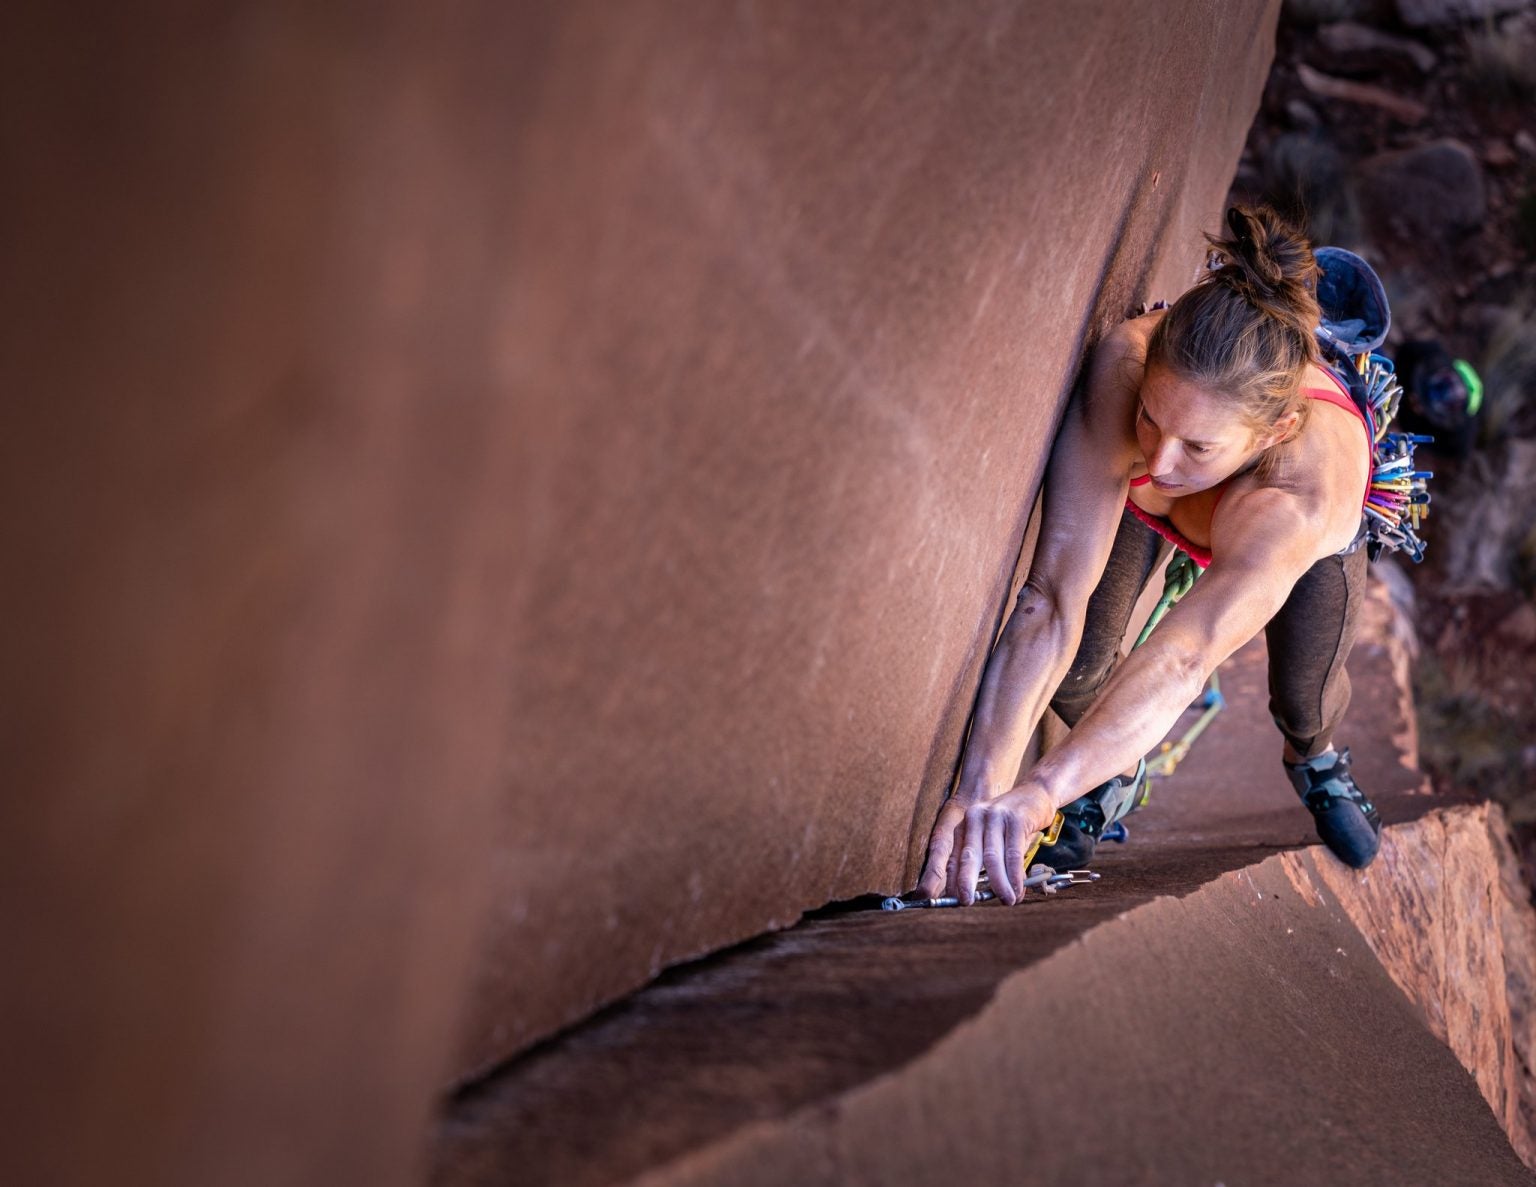 Amity Warme rock climbing. Photo credit: Felipe Tapia Nordenflycht